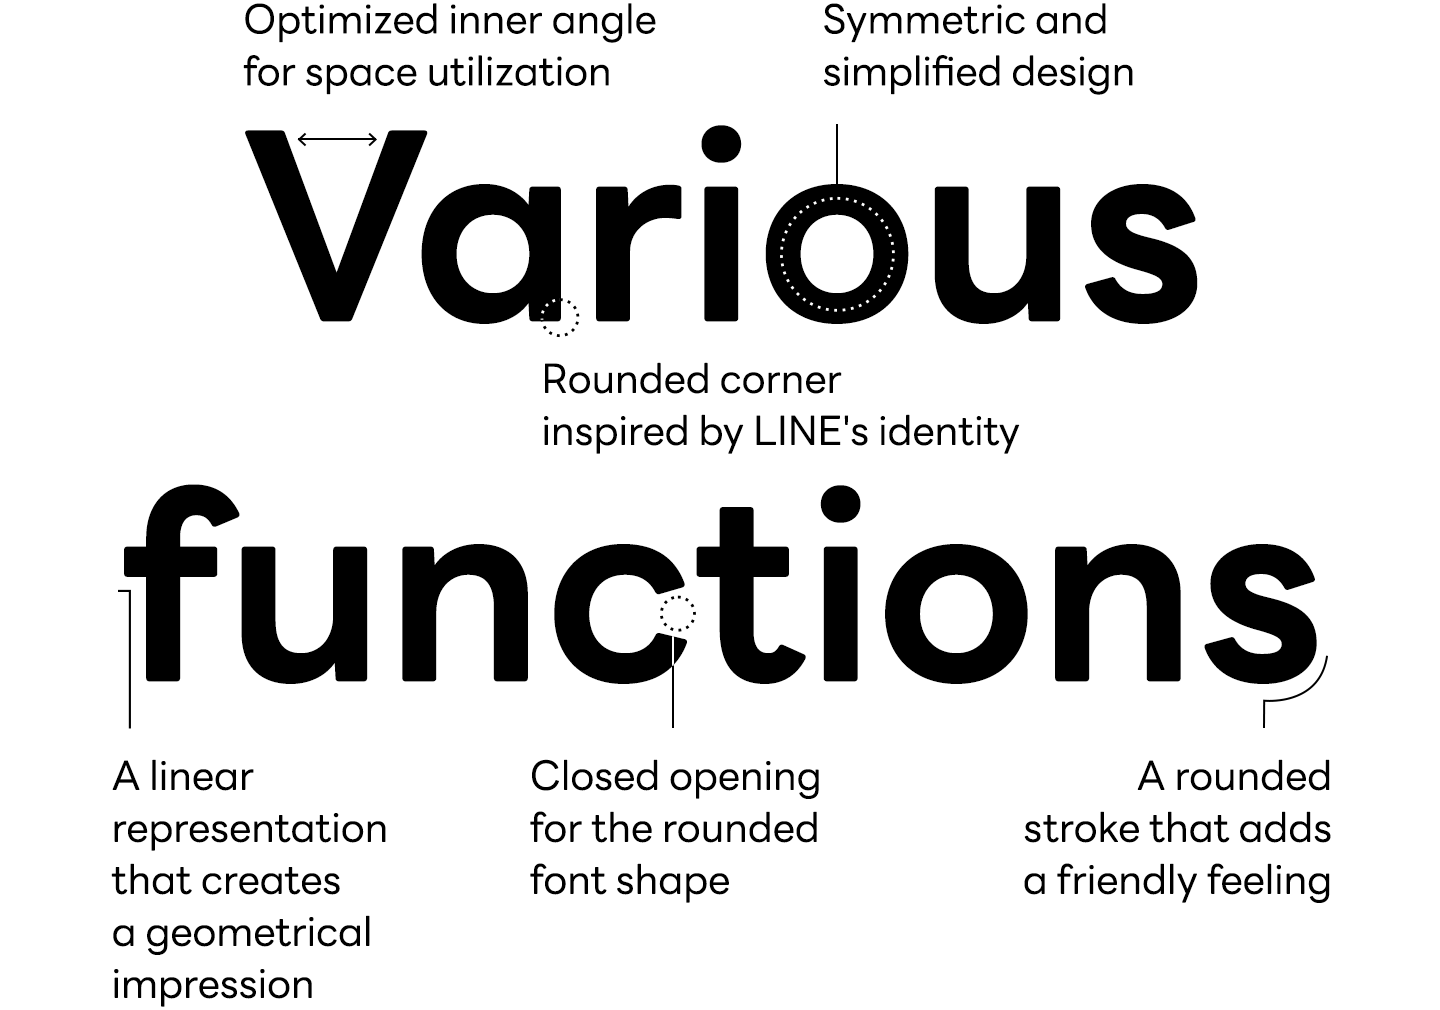 Various functions